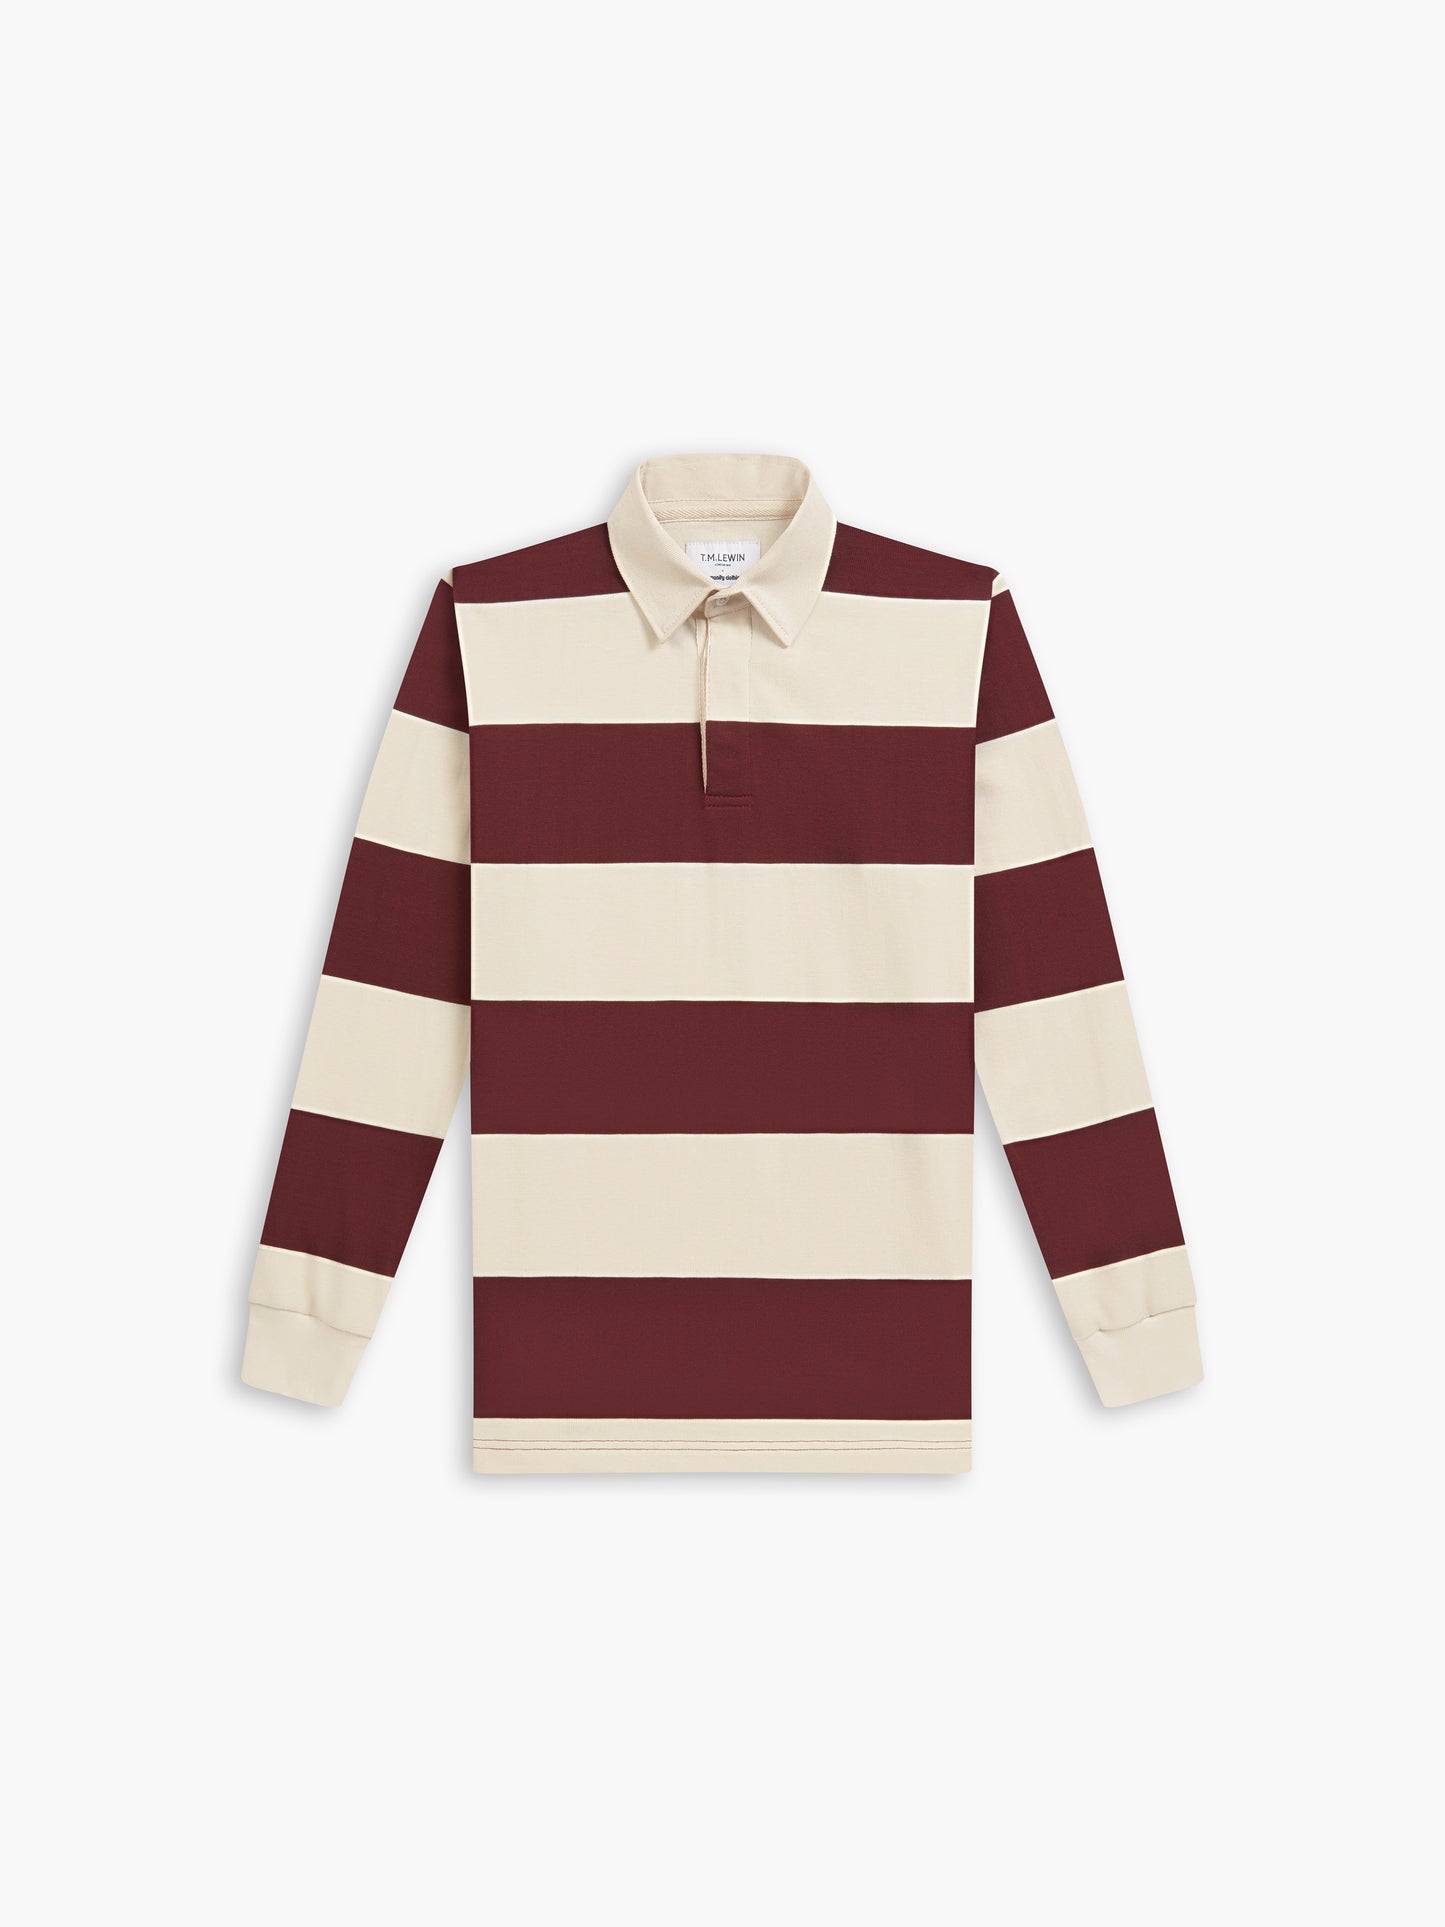 Cotton Rugby Shirt in Burgundy Stripe